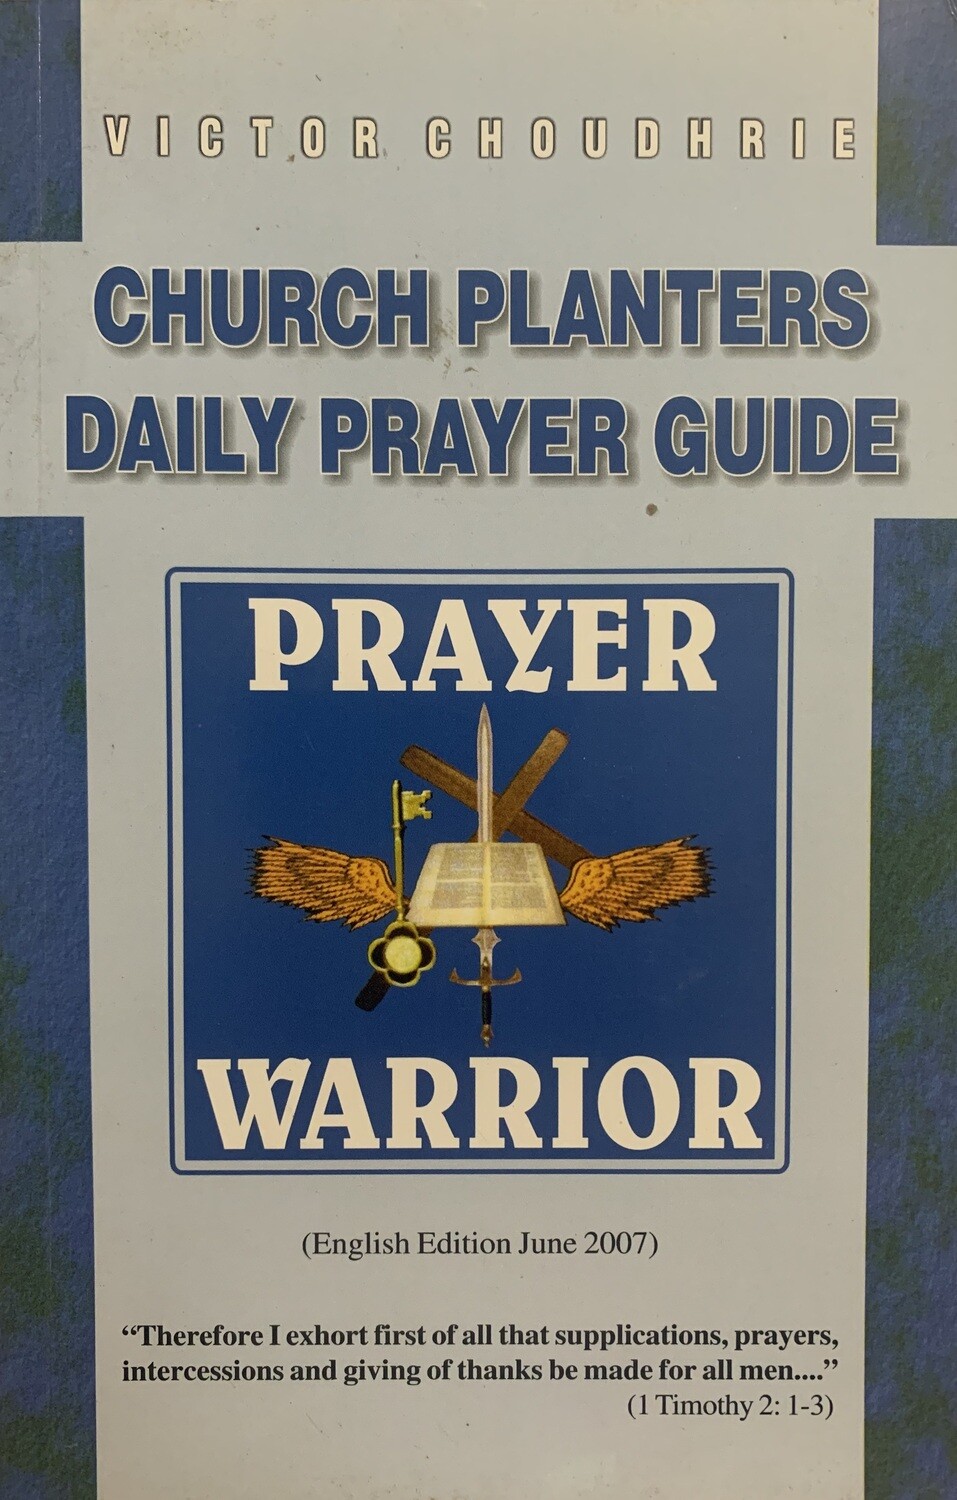 Victor Choudhrie- Church Planters Daily Prayer Guide